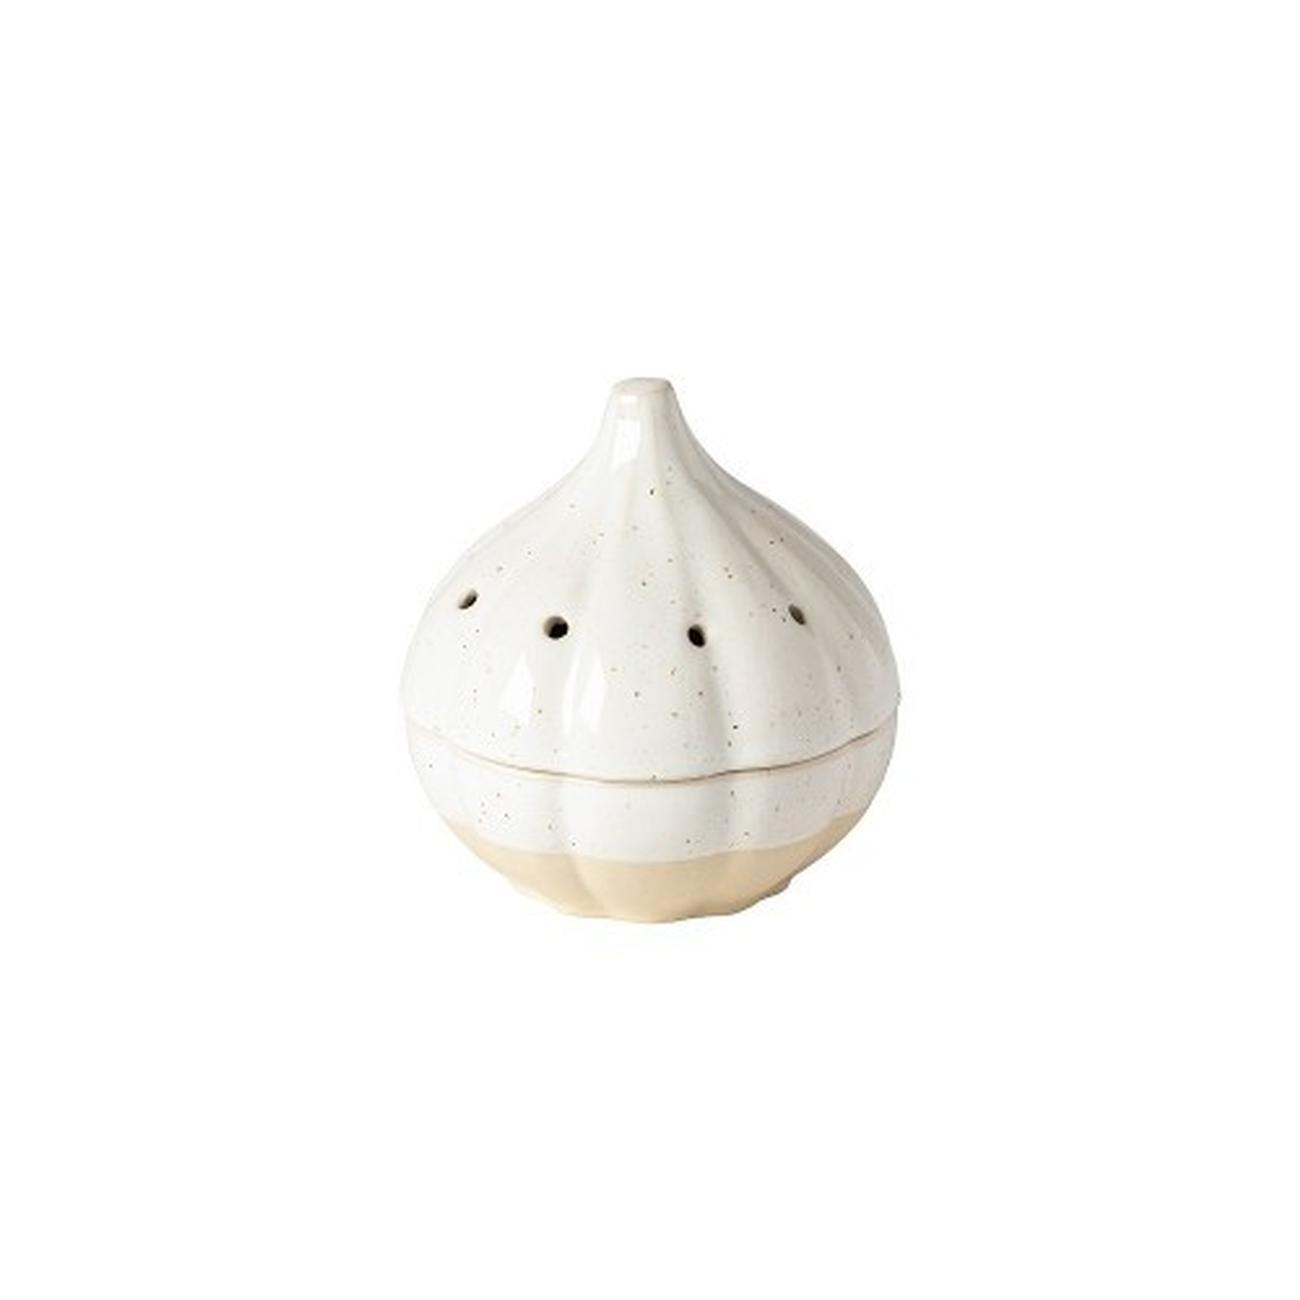 casafina-fattoria-white-garlic-canister-13.6cm - Casafina Fattoria White Garlic Canister 13.6cm